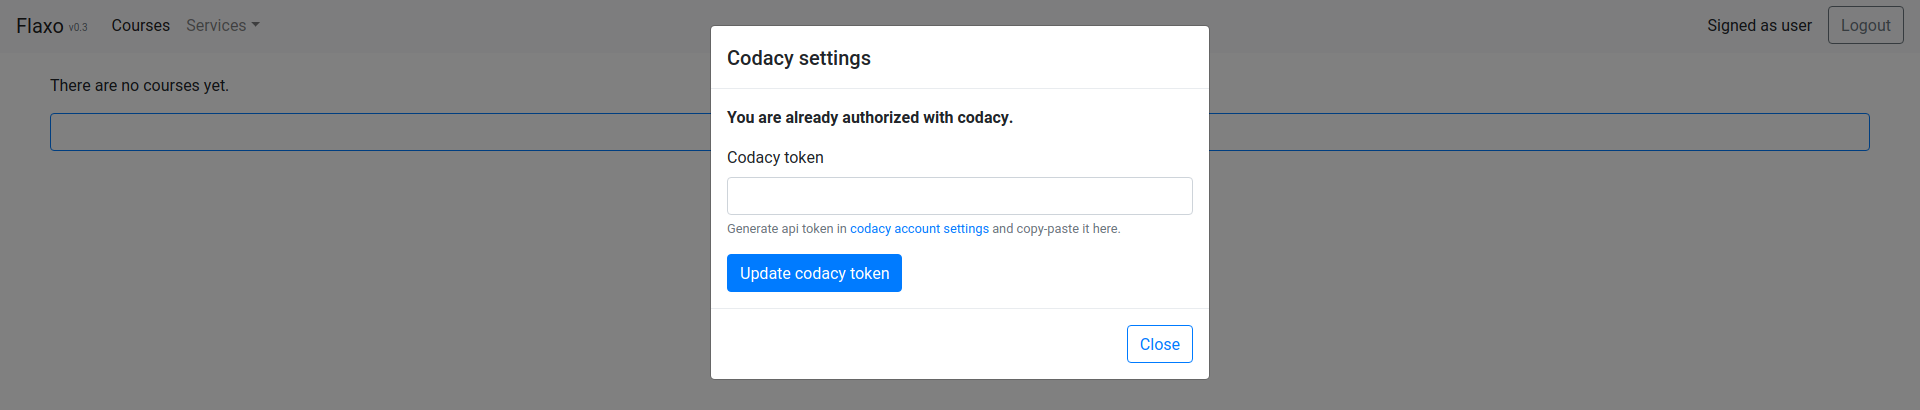 codacy-authorization-popup-authorized